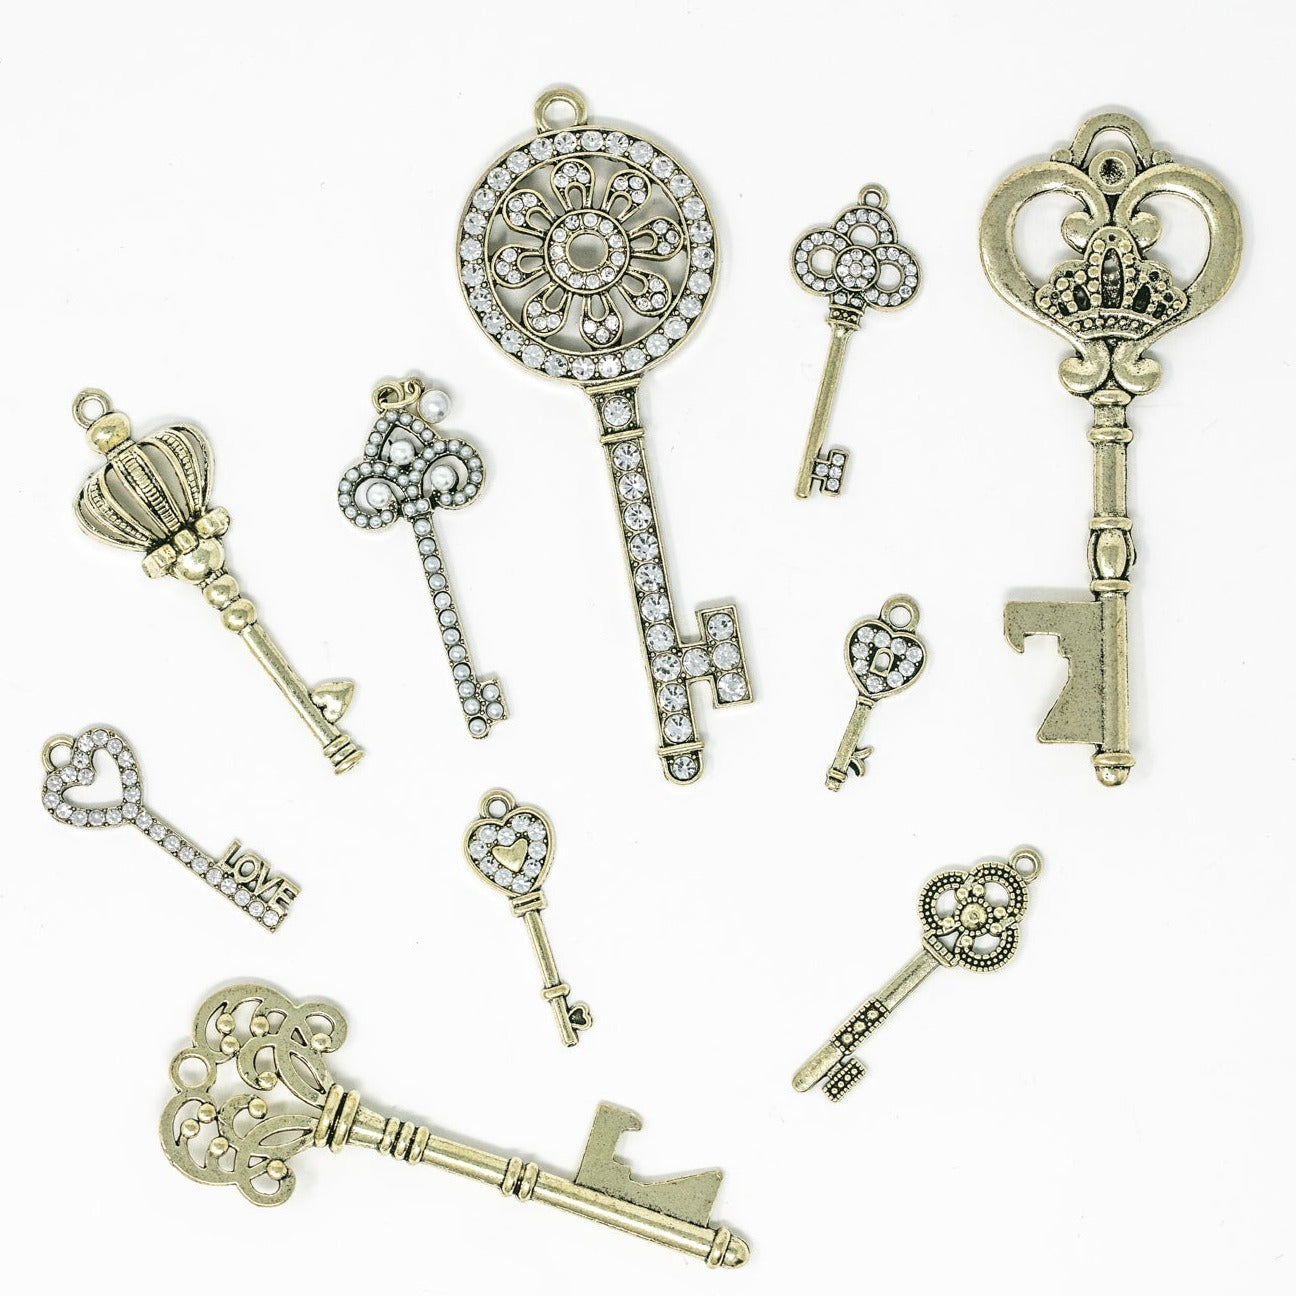 Antique Bronze Vintage Keys Embellishments for crafts weddings and home decor